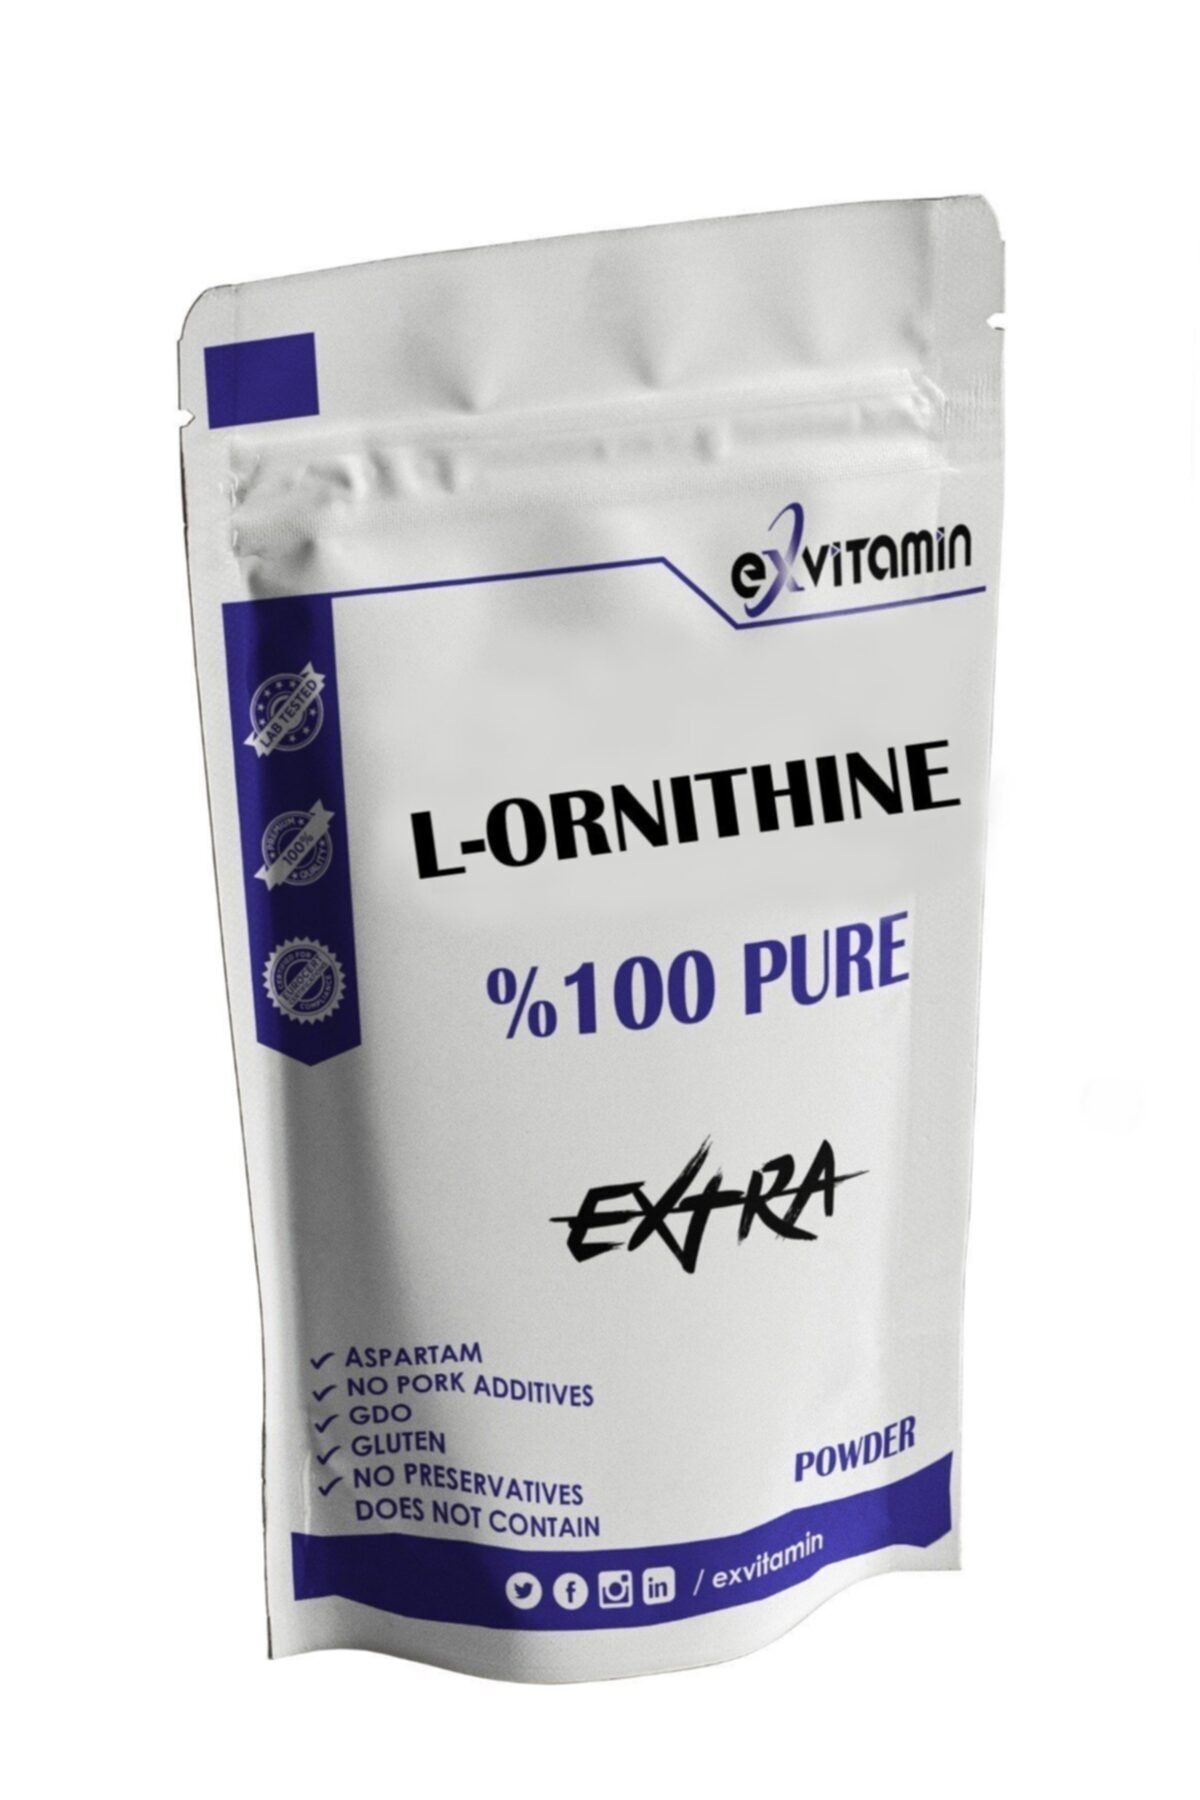 exvitamin Ornitin L 0rnithine Pure Katkısız 200 gr